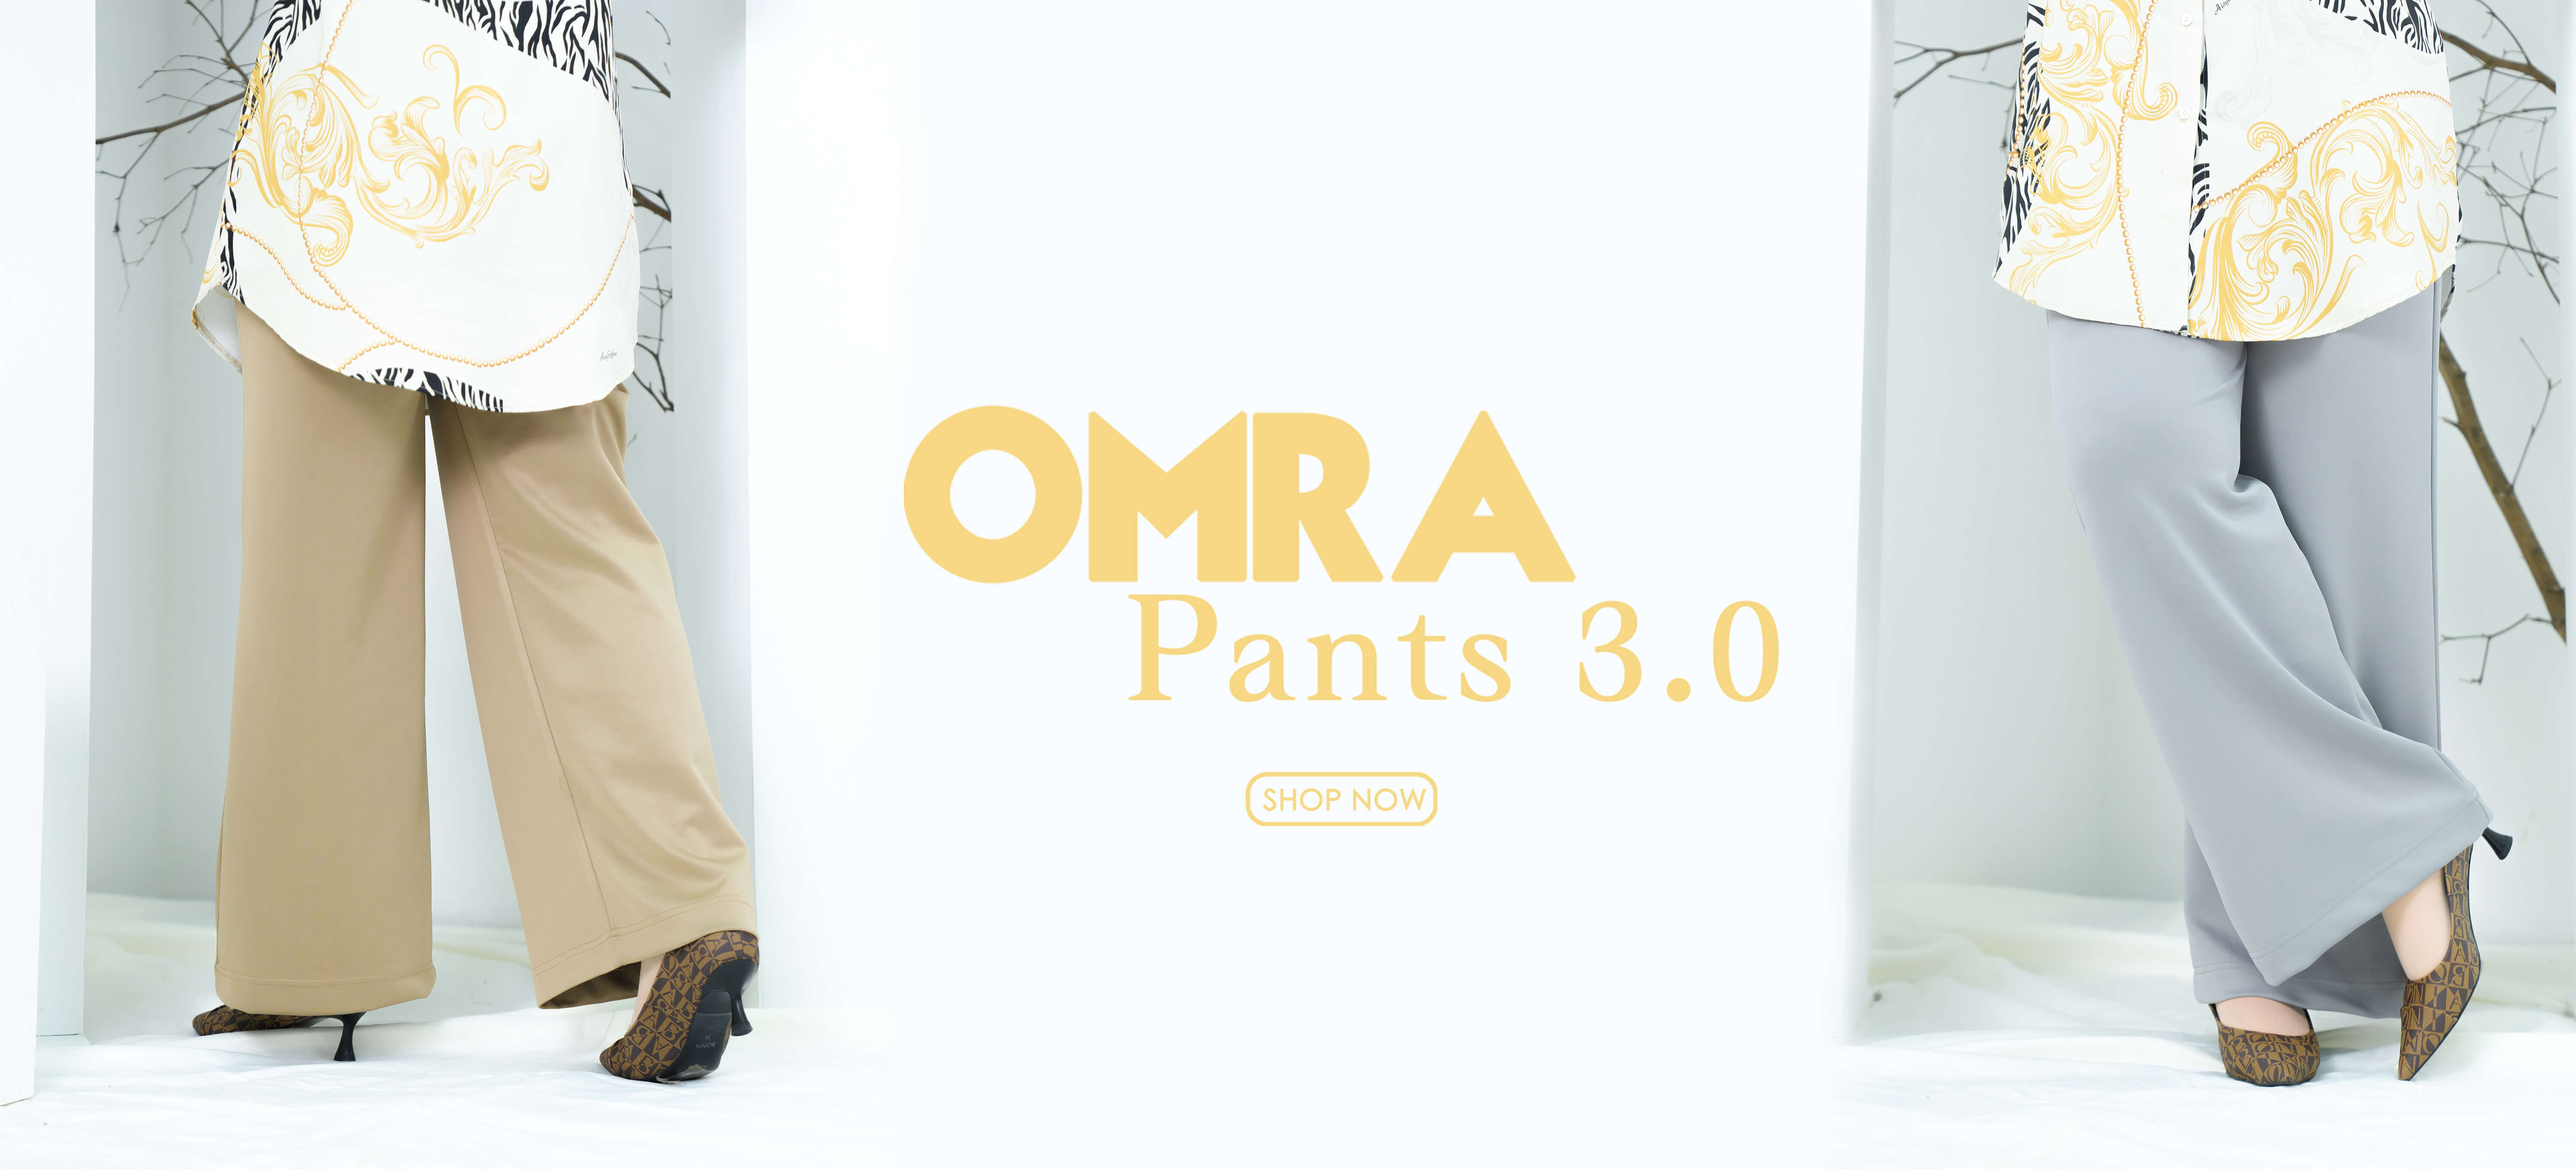 Omra Pants 3.0